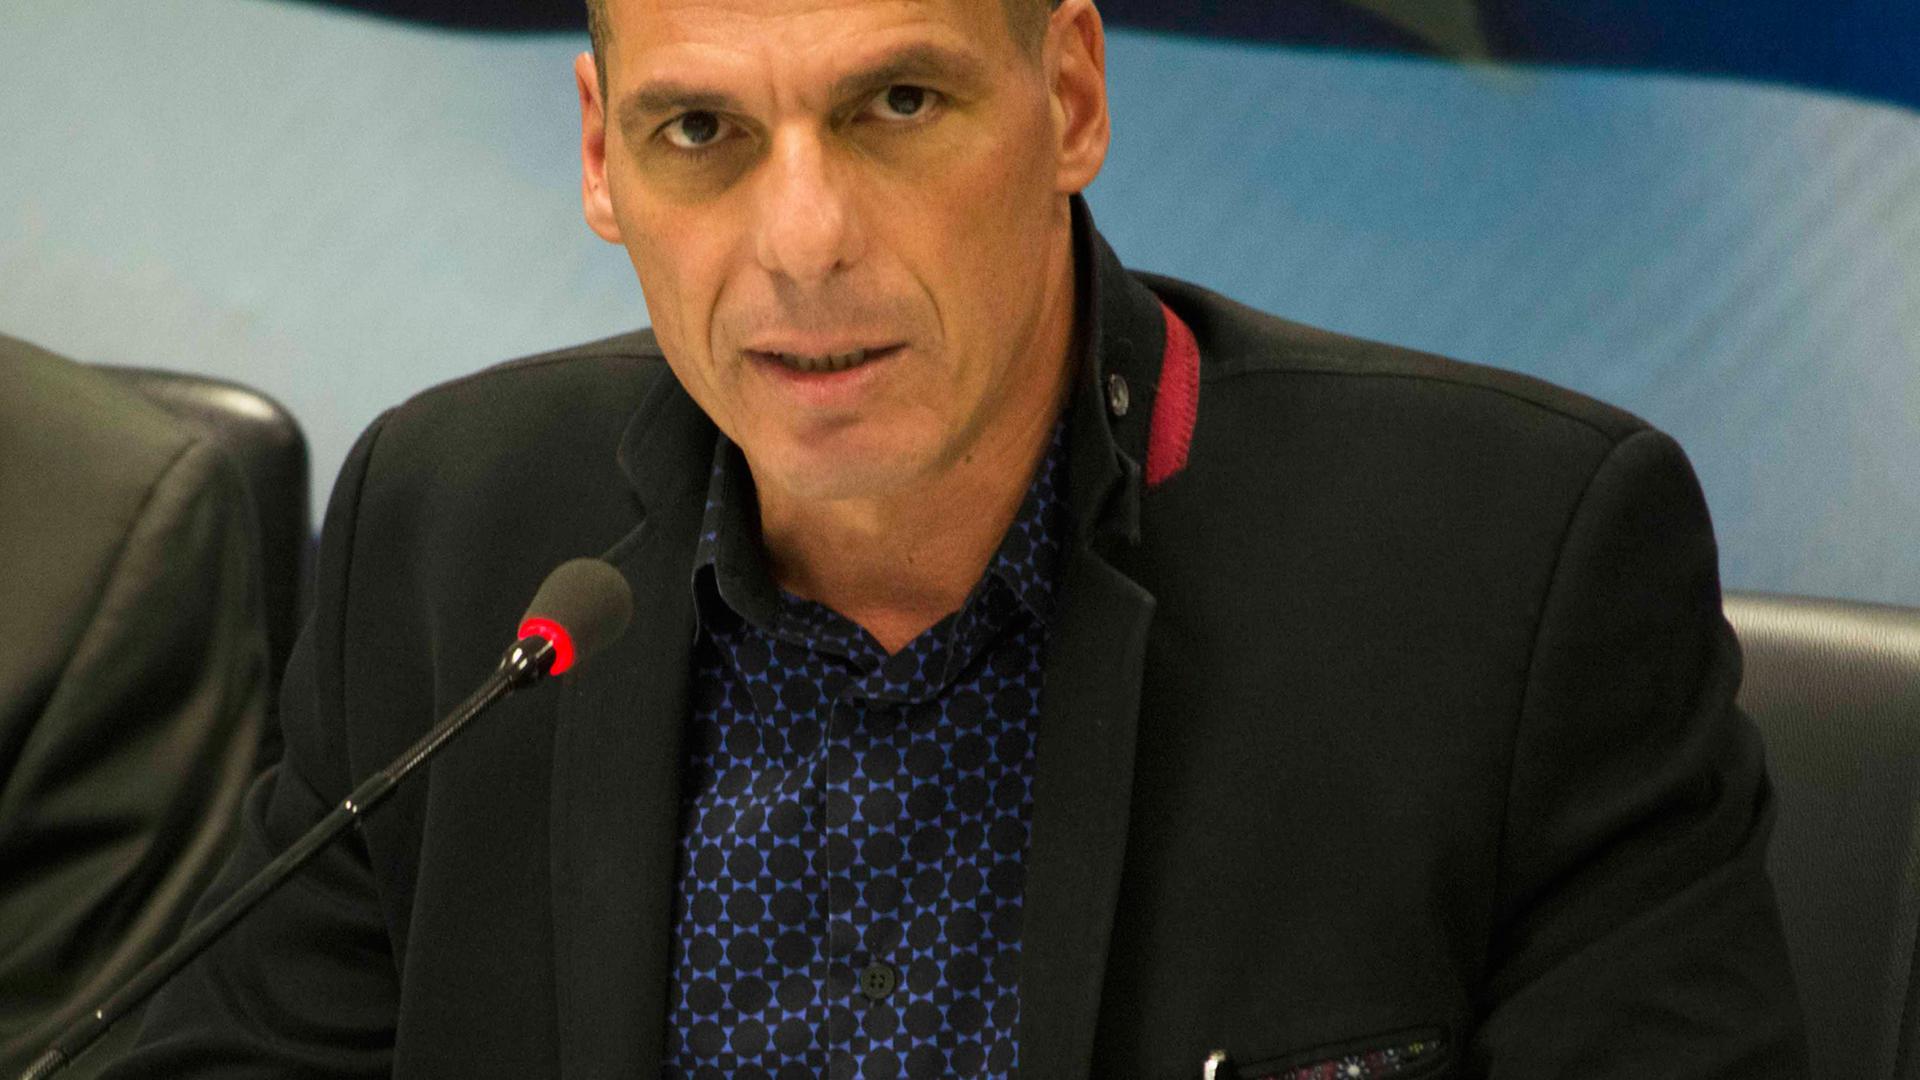 Yanis Varoufakis spricht an einem Mikrofon.